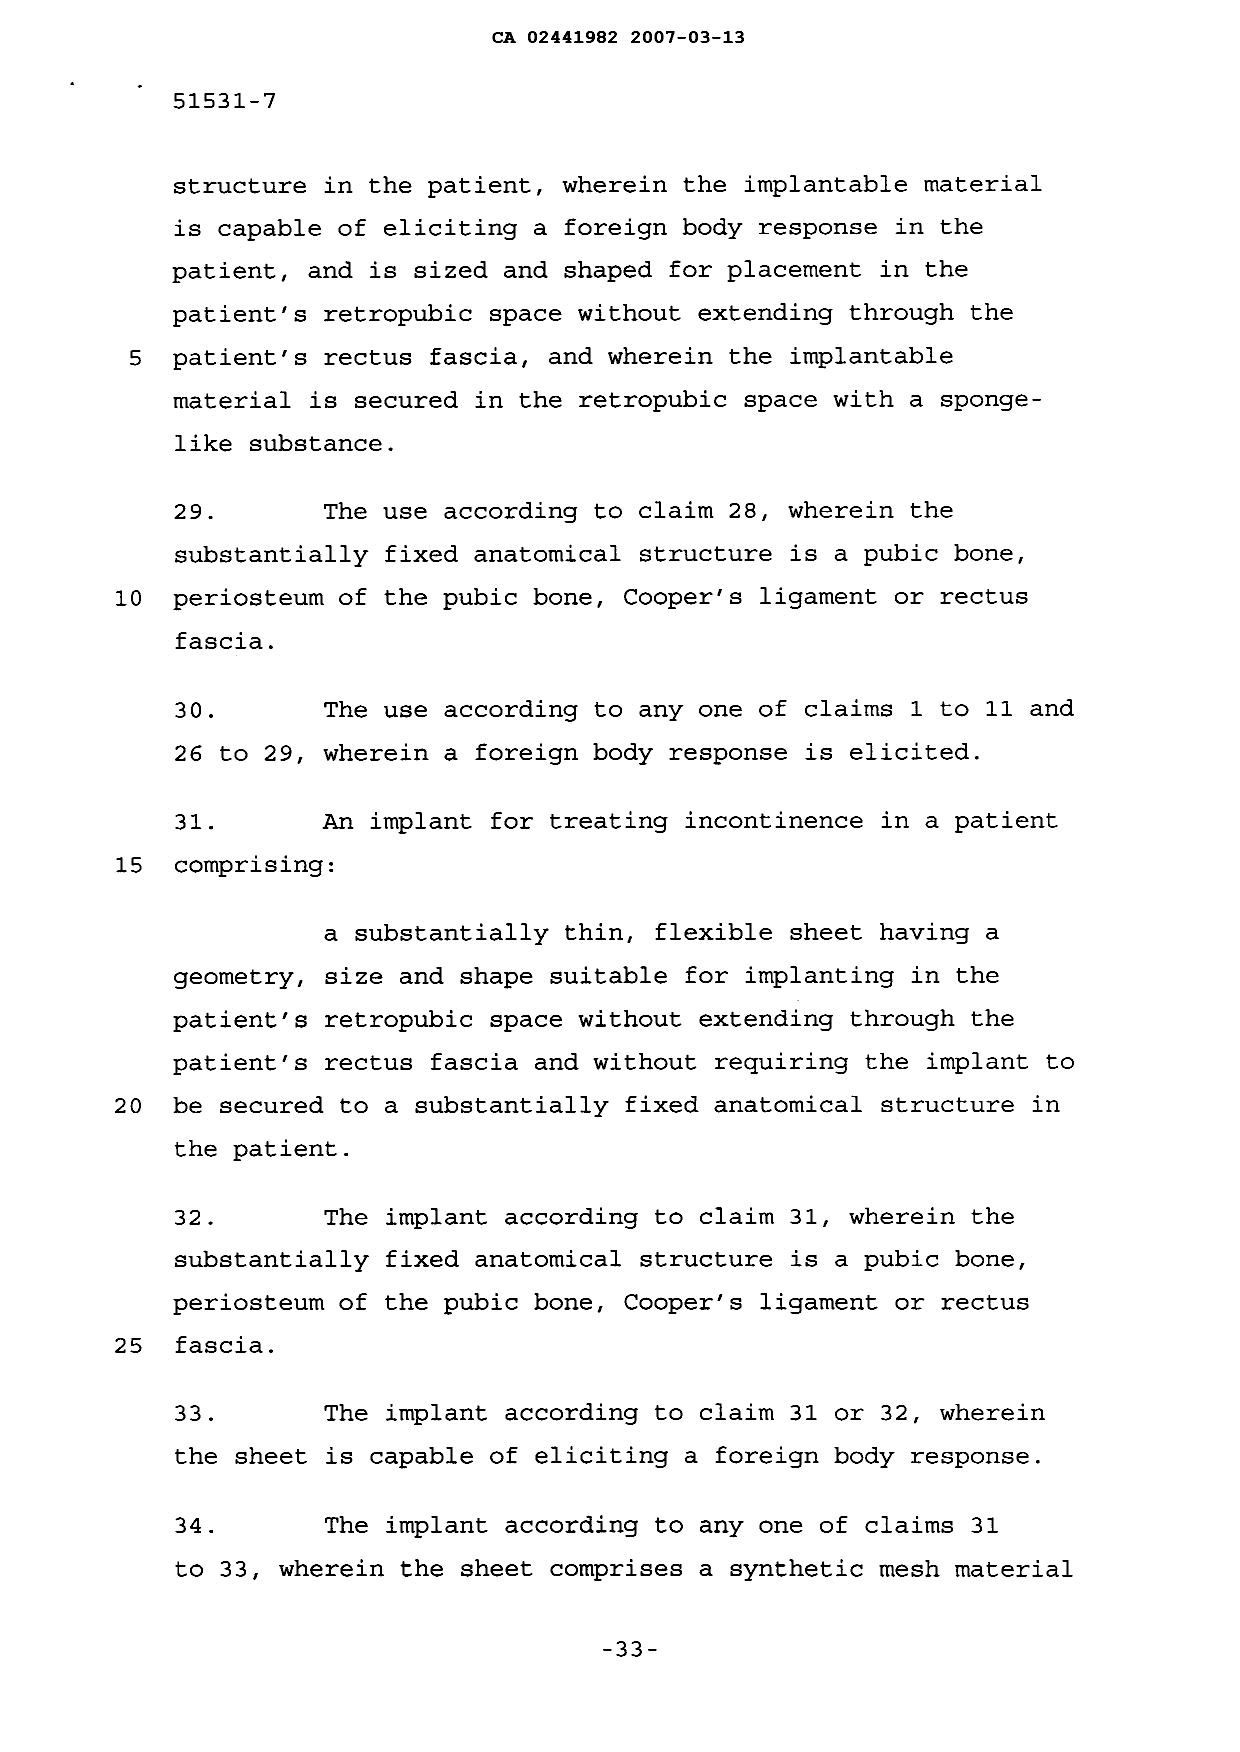 Canadian Patent Document 2441982. Prosecution-Amendment 20061213. Image 12 of 13